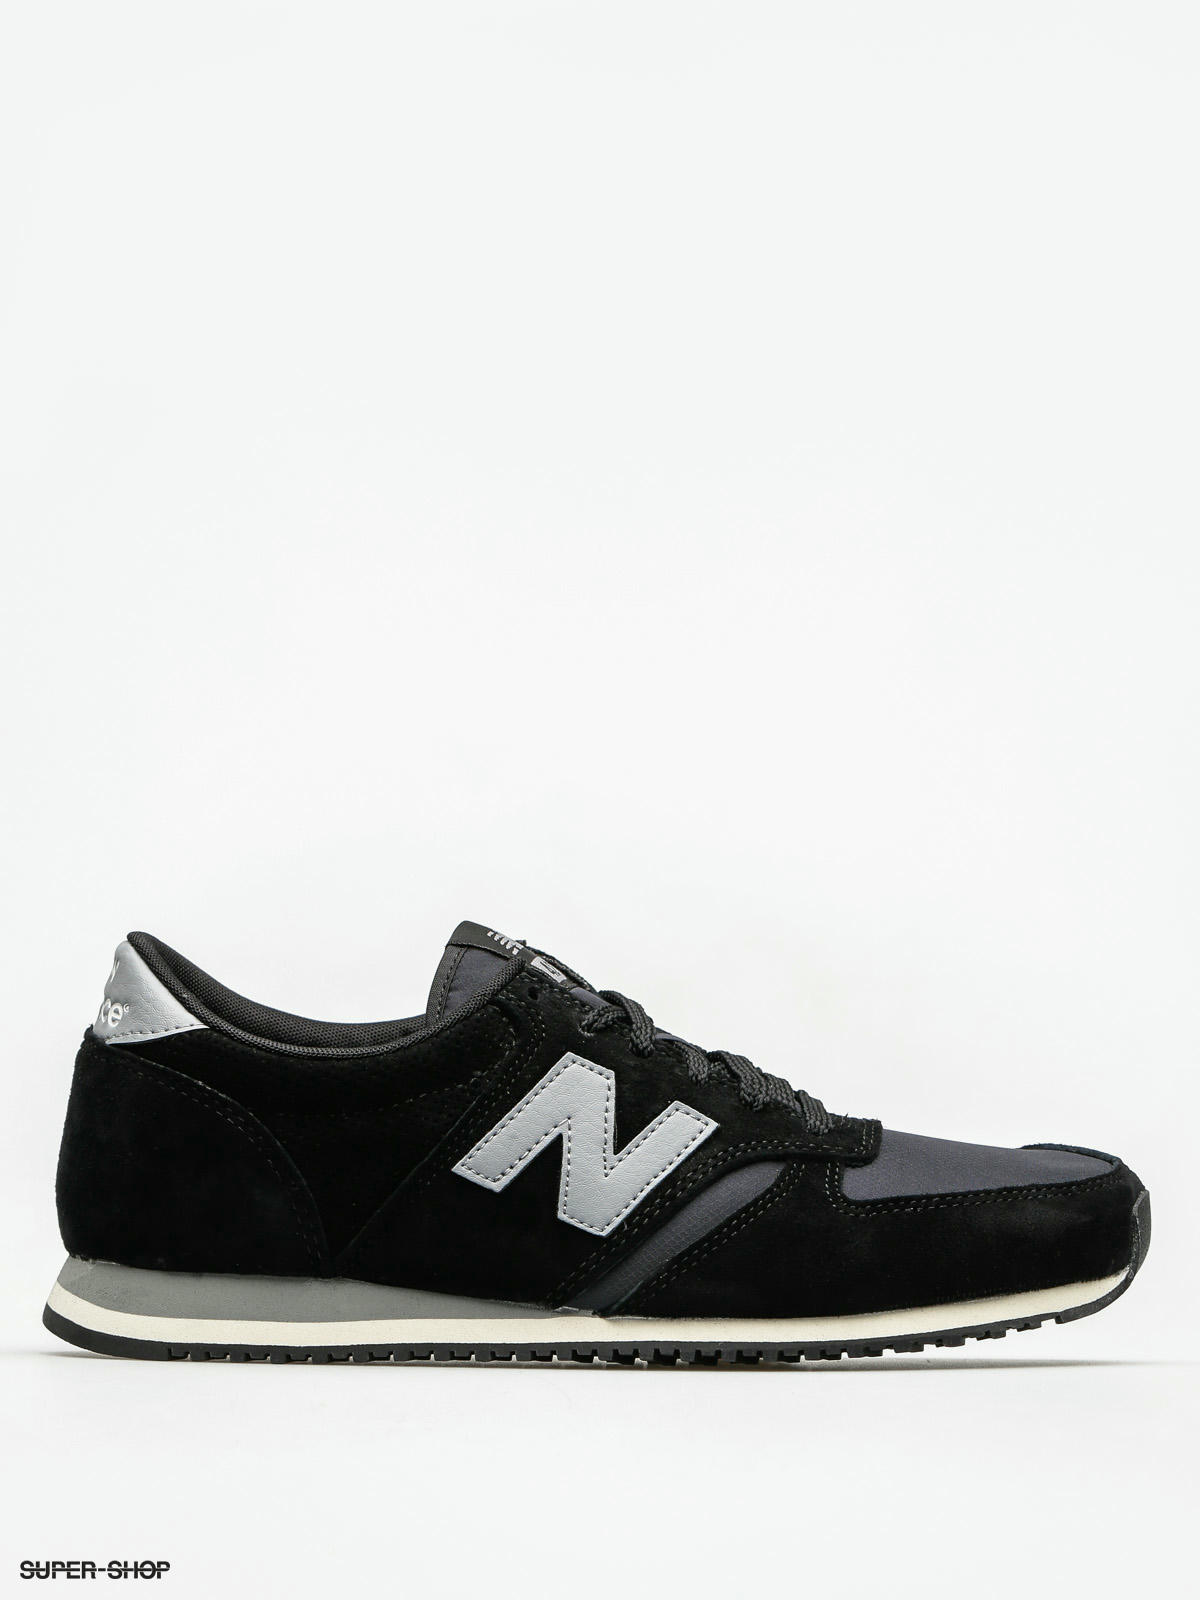 New Balance Shoes 420 (black)